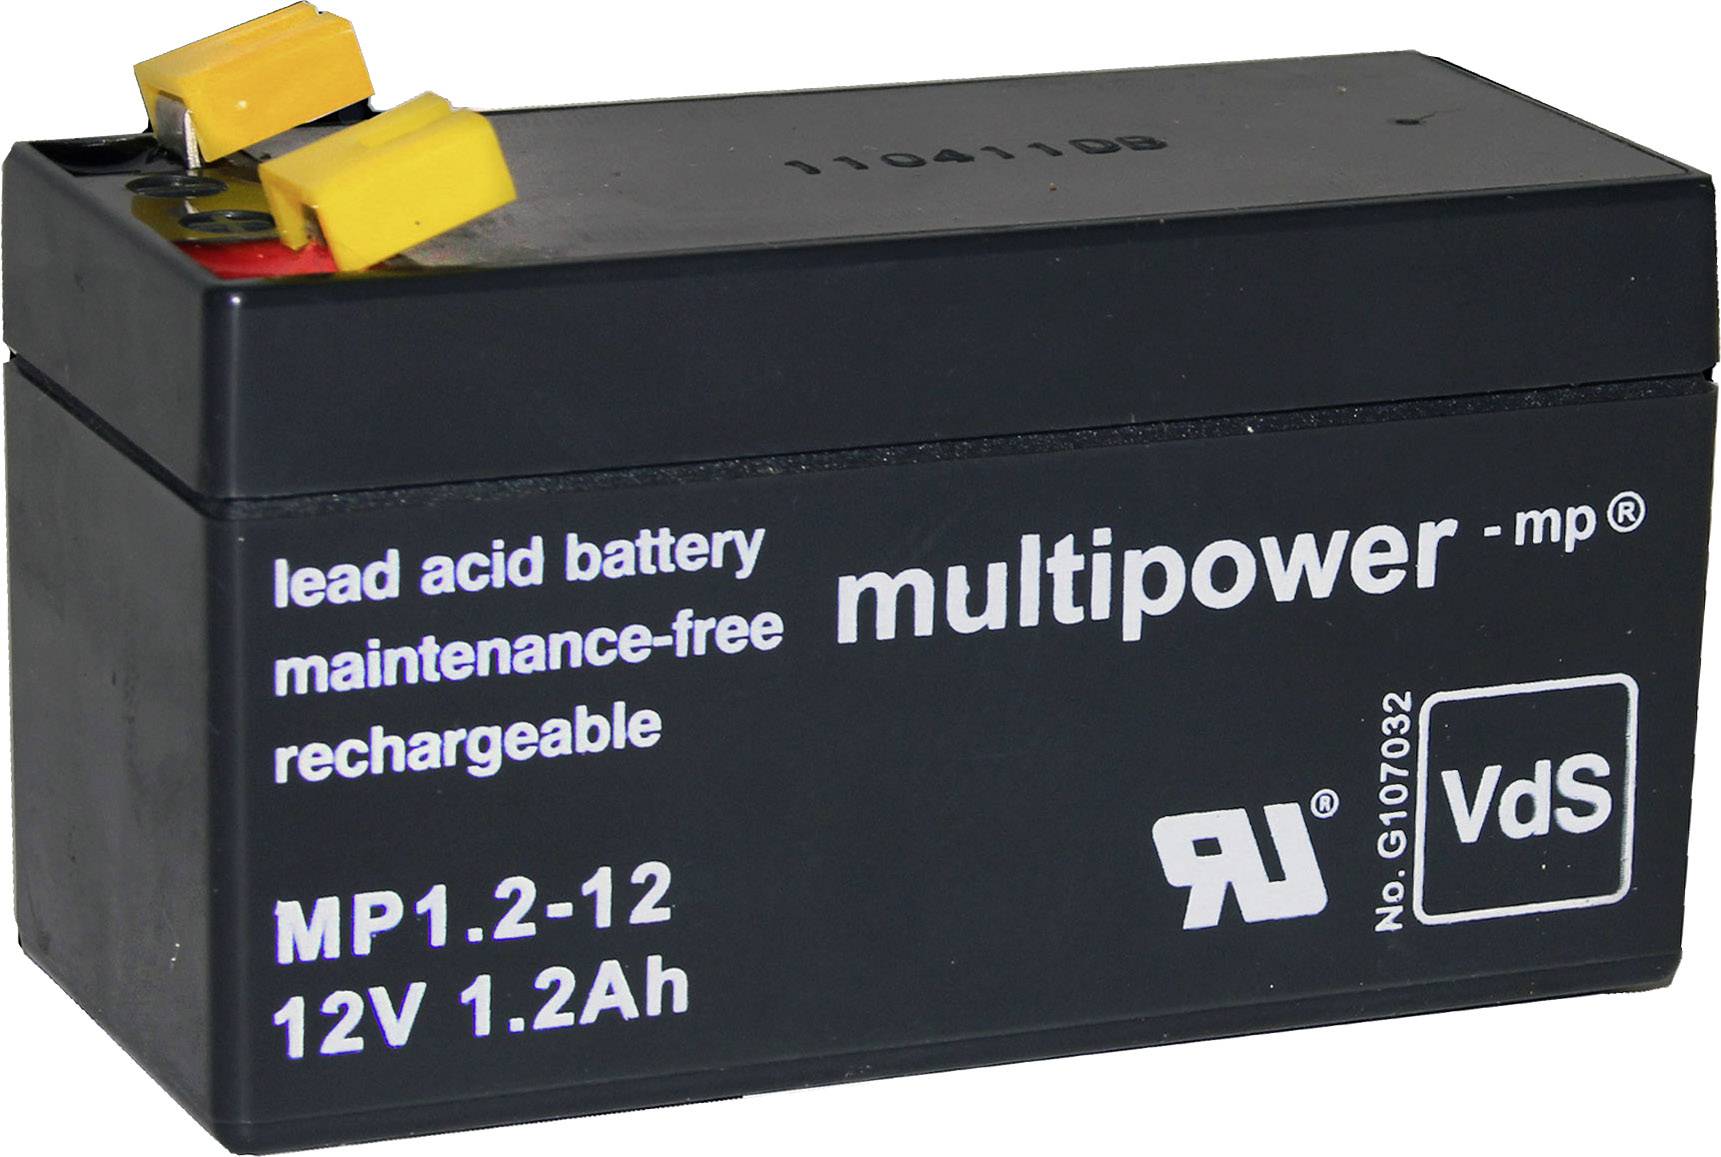 12v 1.2 ah. Аккумуляторы Multipower 12v 2.4Ah. 700-202 Аккумулятор (12v, 1.2Ah, NICD) Hammer. Alfa fb 1.2-12 12v 1.2Ah AGM. AGM VRLA Battery 12v 1.2Ah.